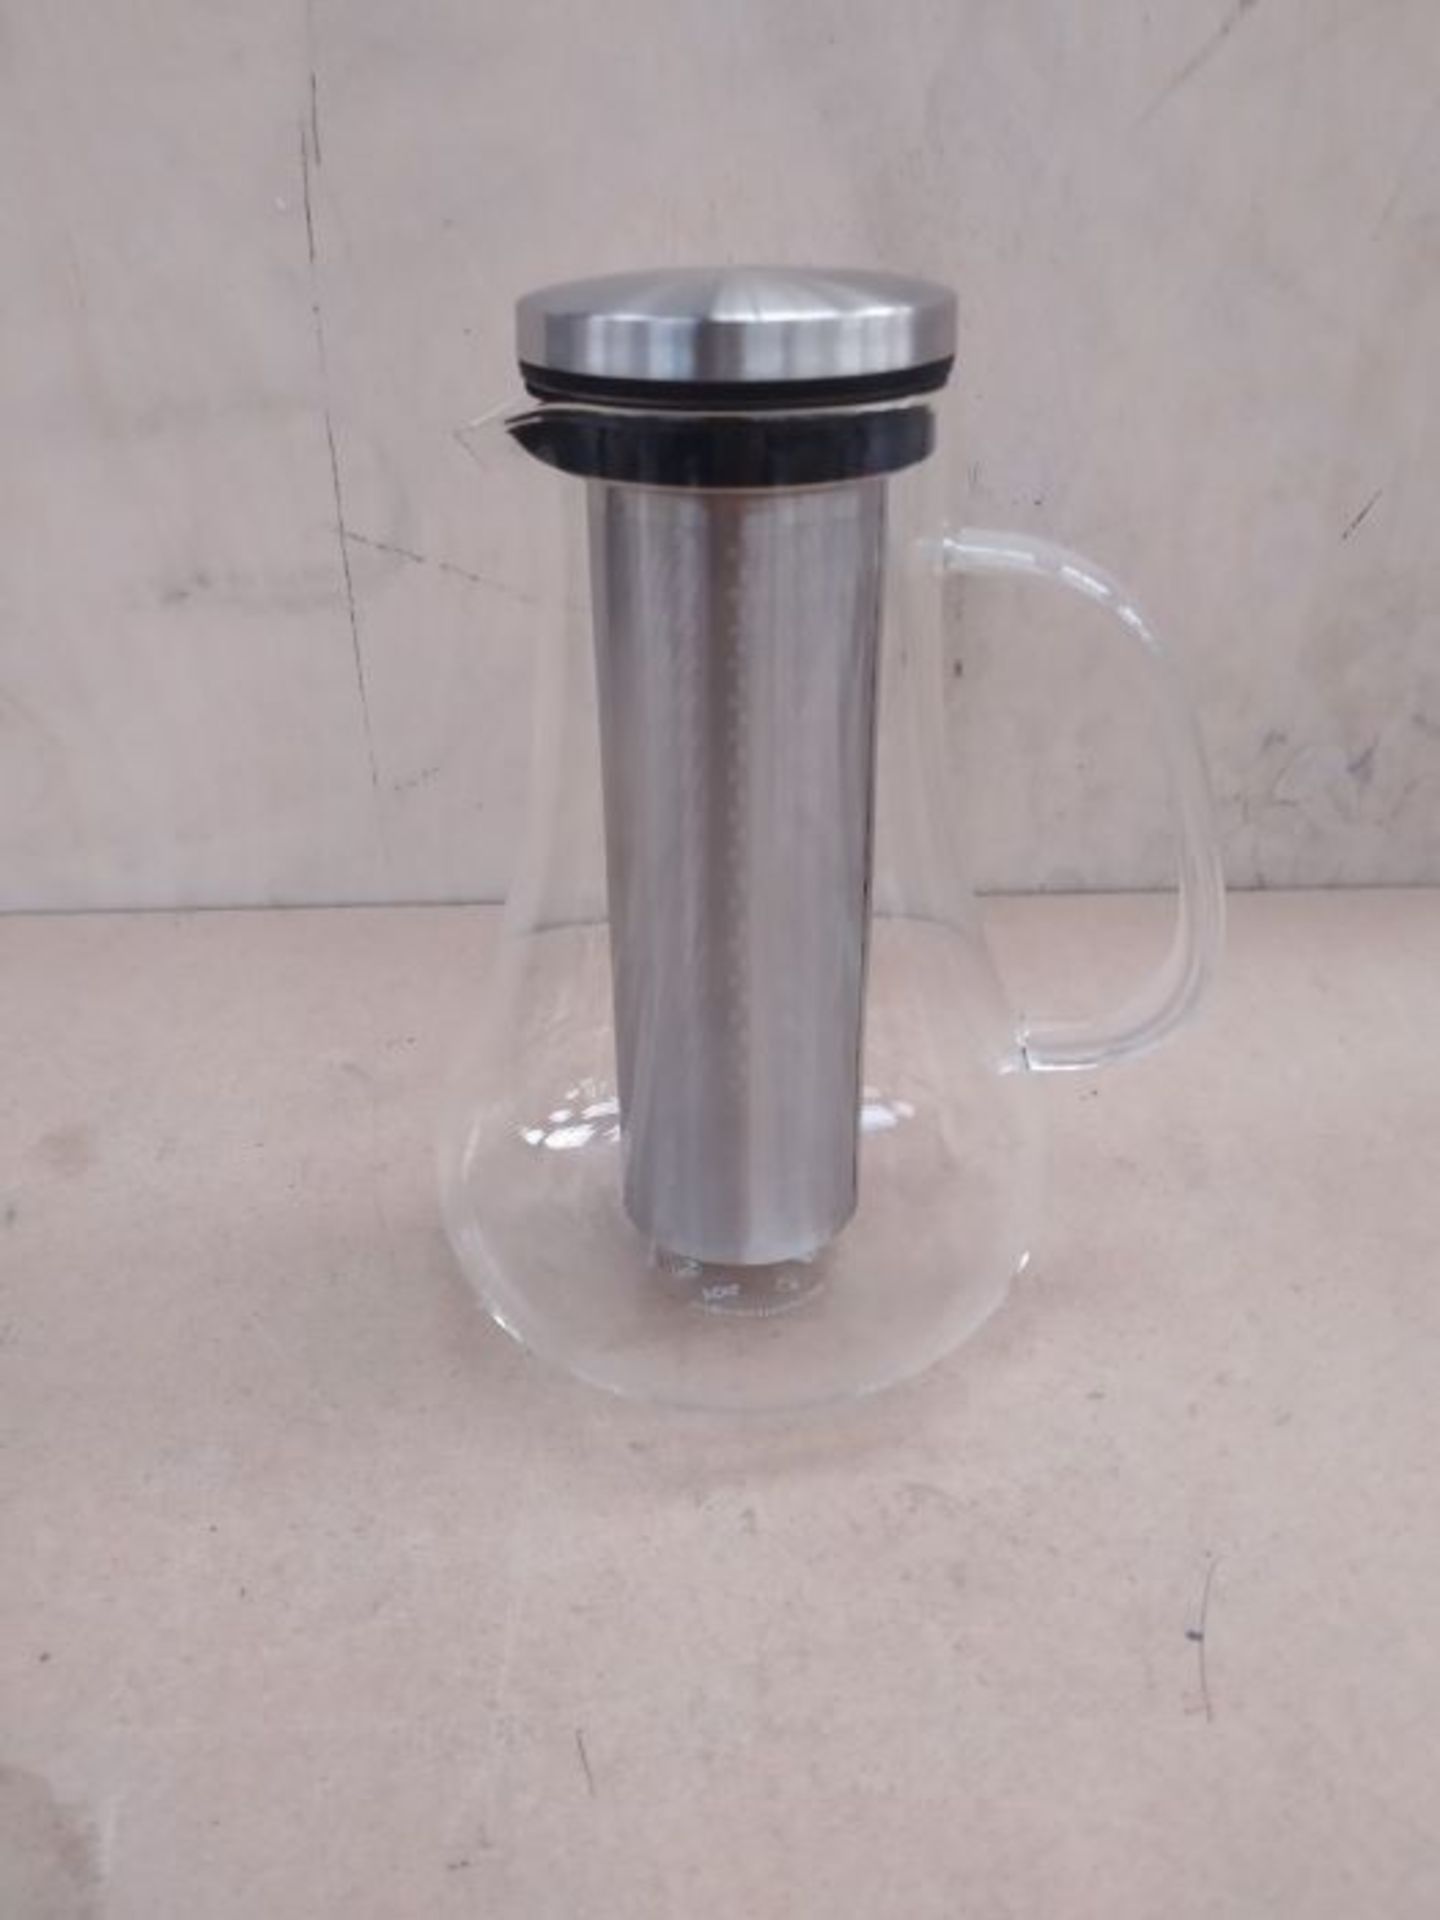 pH REPLENISH Glass Alkaline Water Pitcher/Jug - Alkaline Water Filter Pitcher/Jug by I - Image 3 of 3